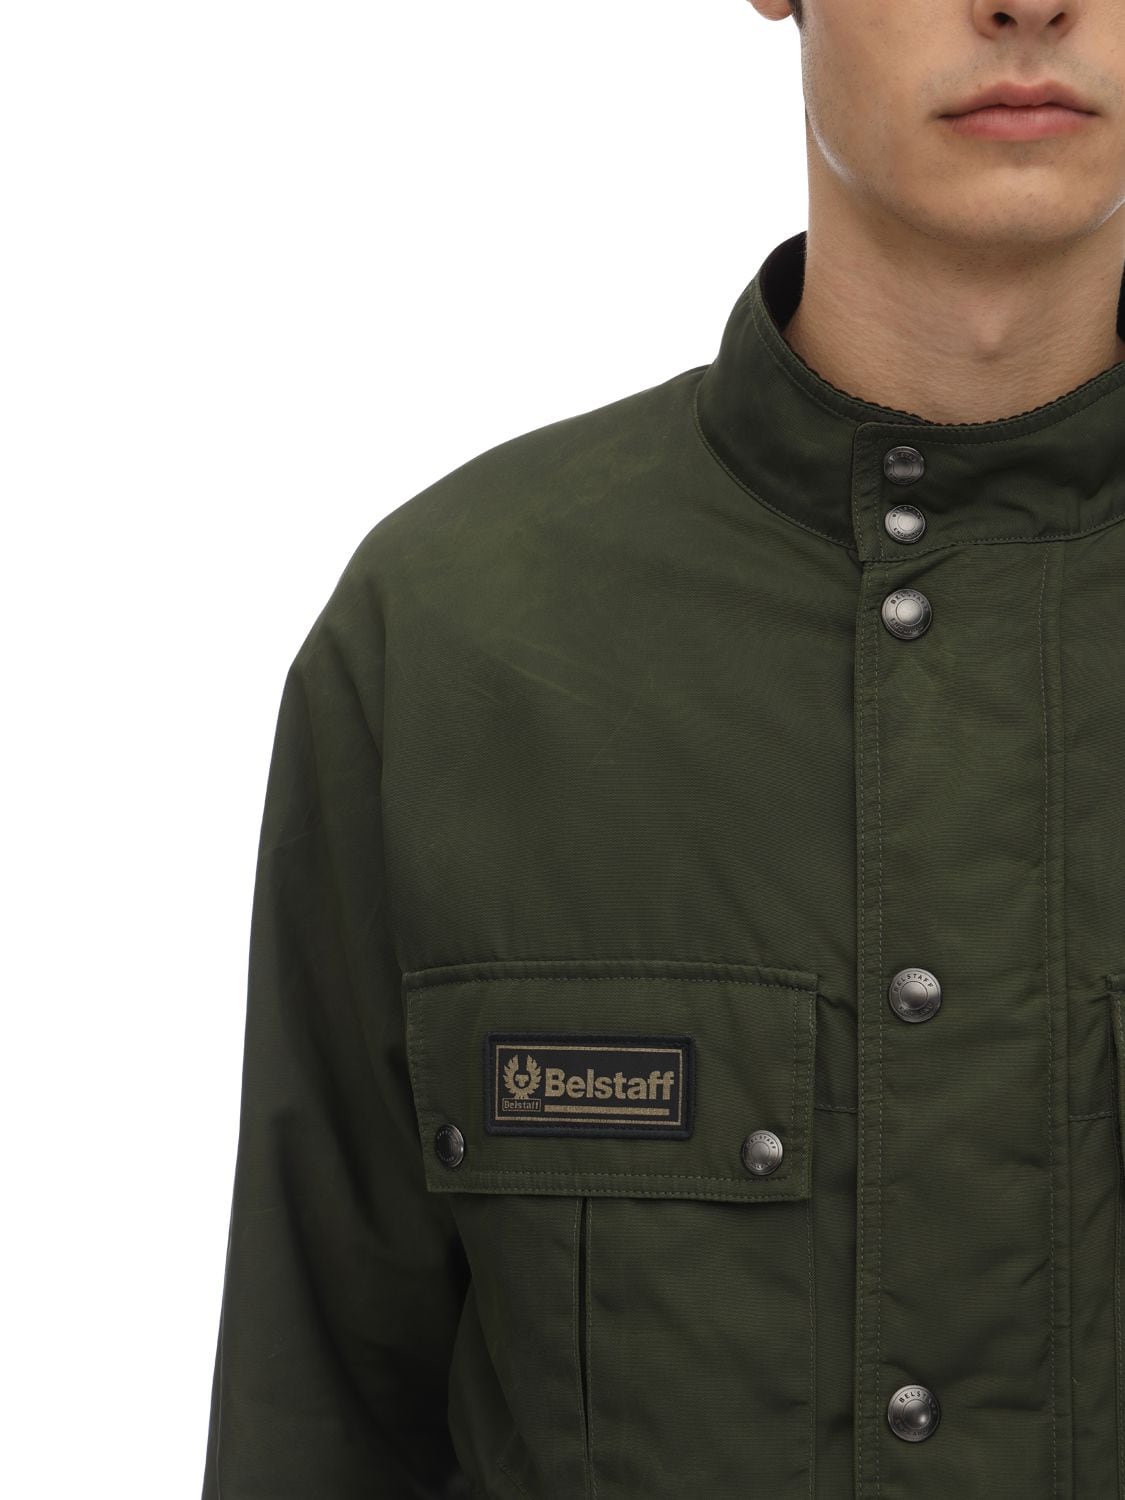 Belstaff Instructor Nylon Jacket In Green | ModeSens